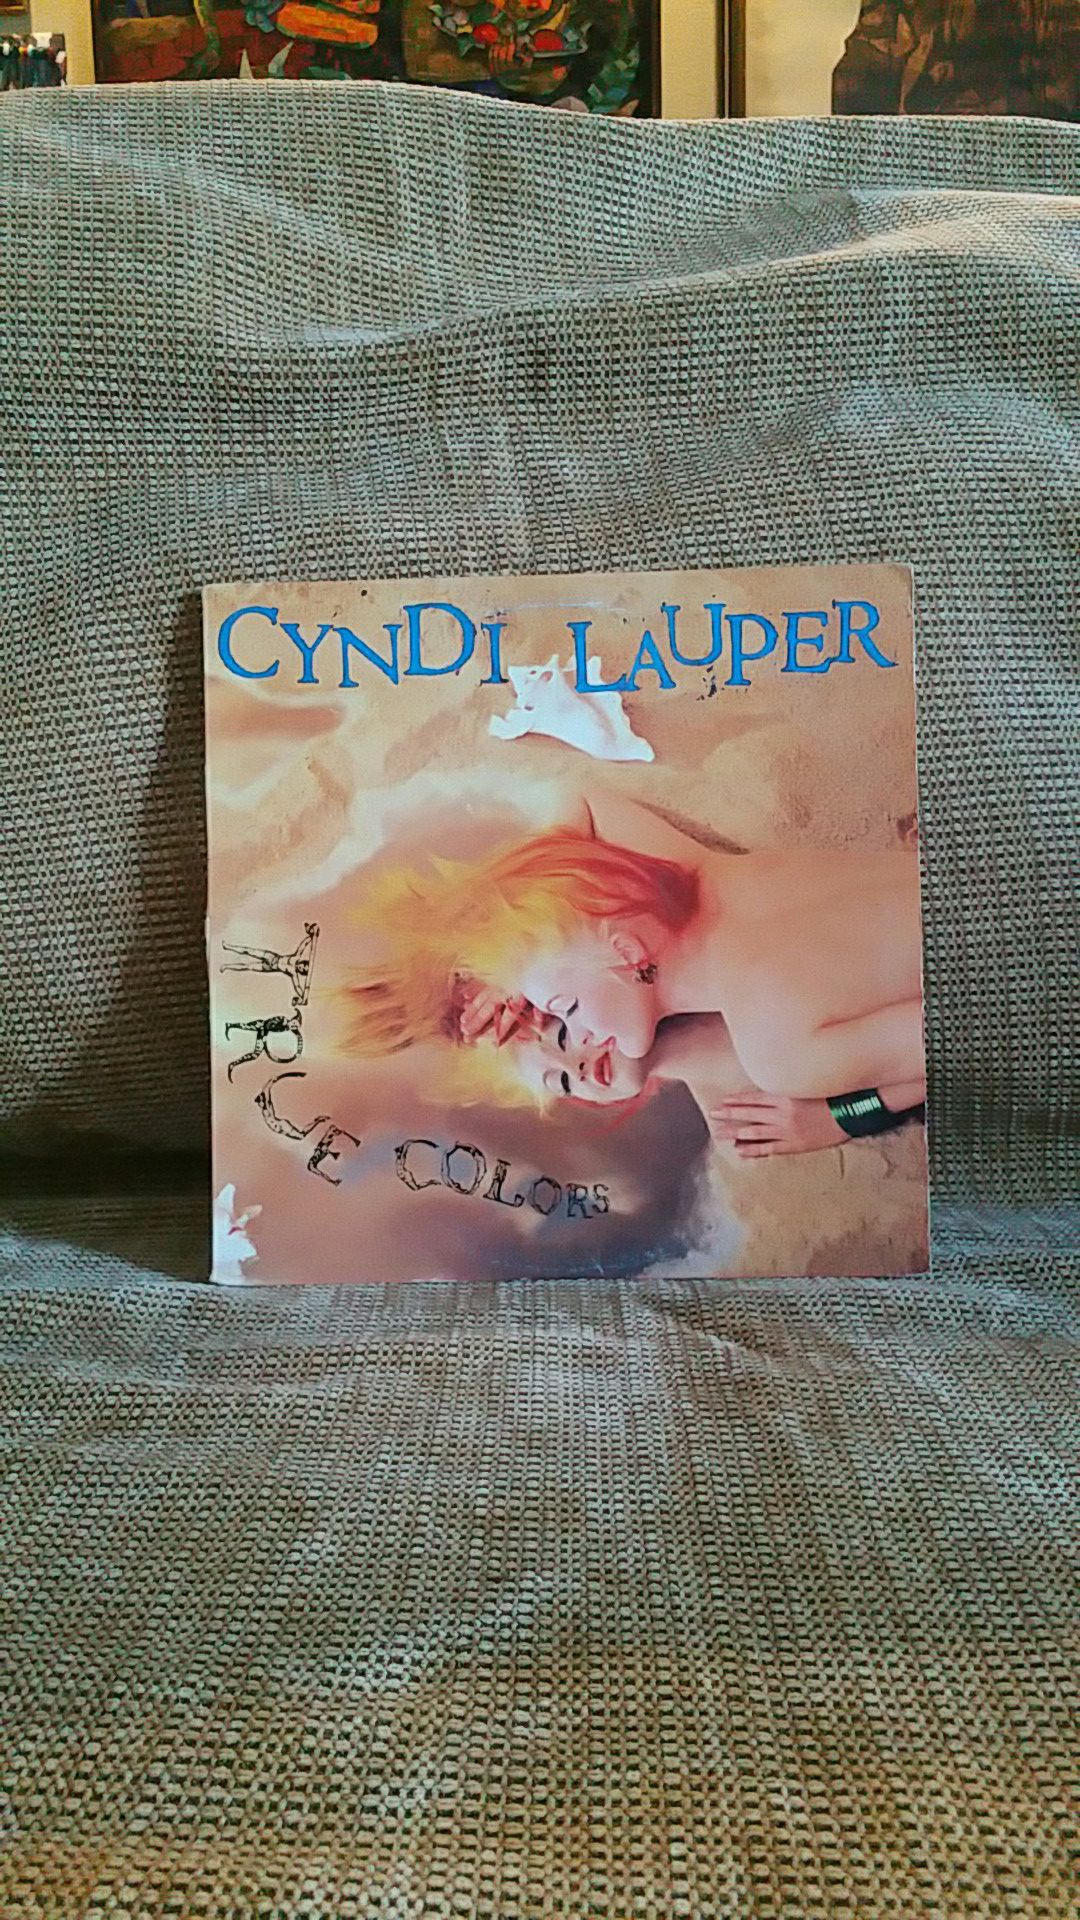 Cyndi Lauper "True Colors."